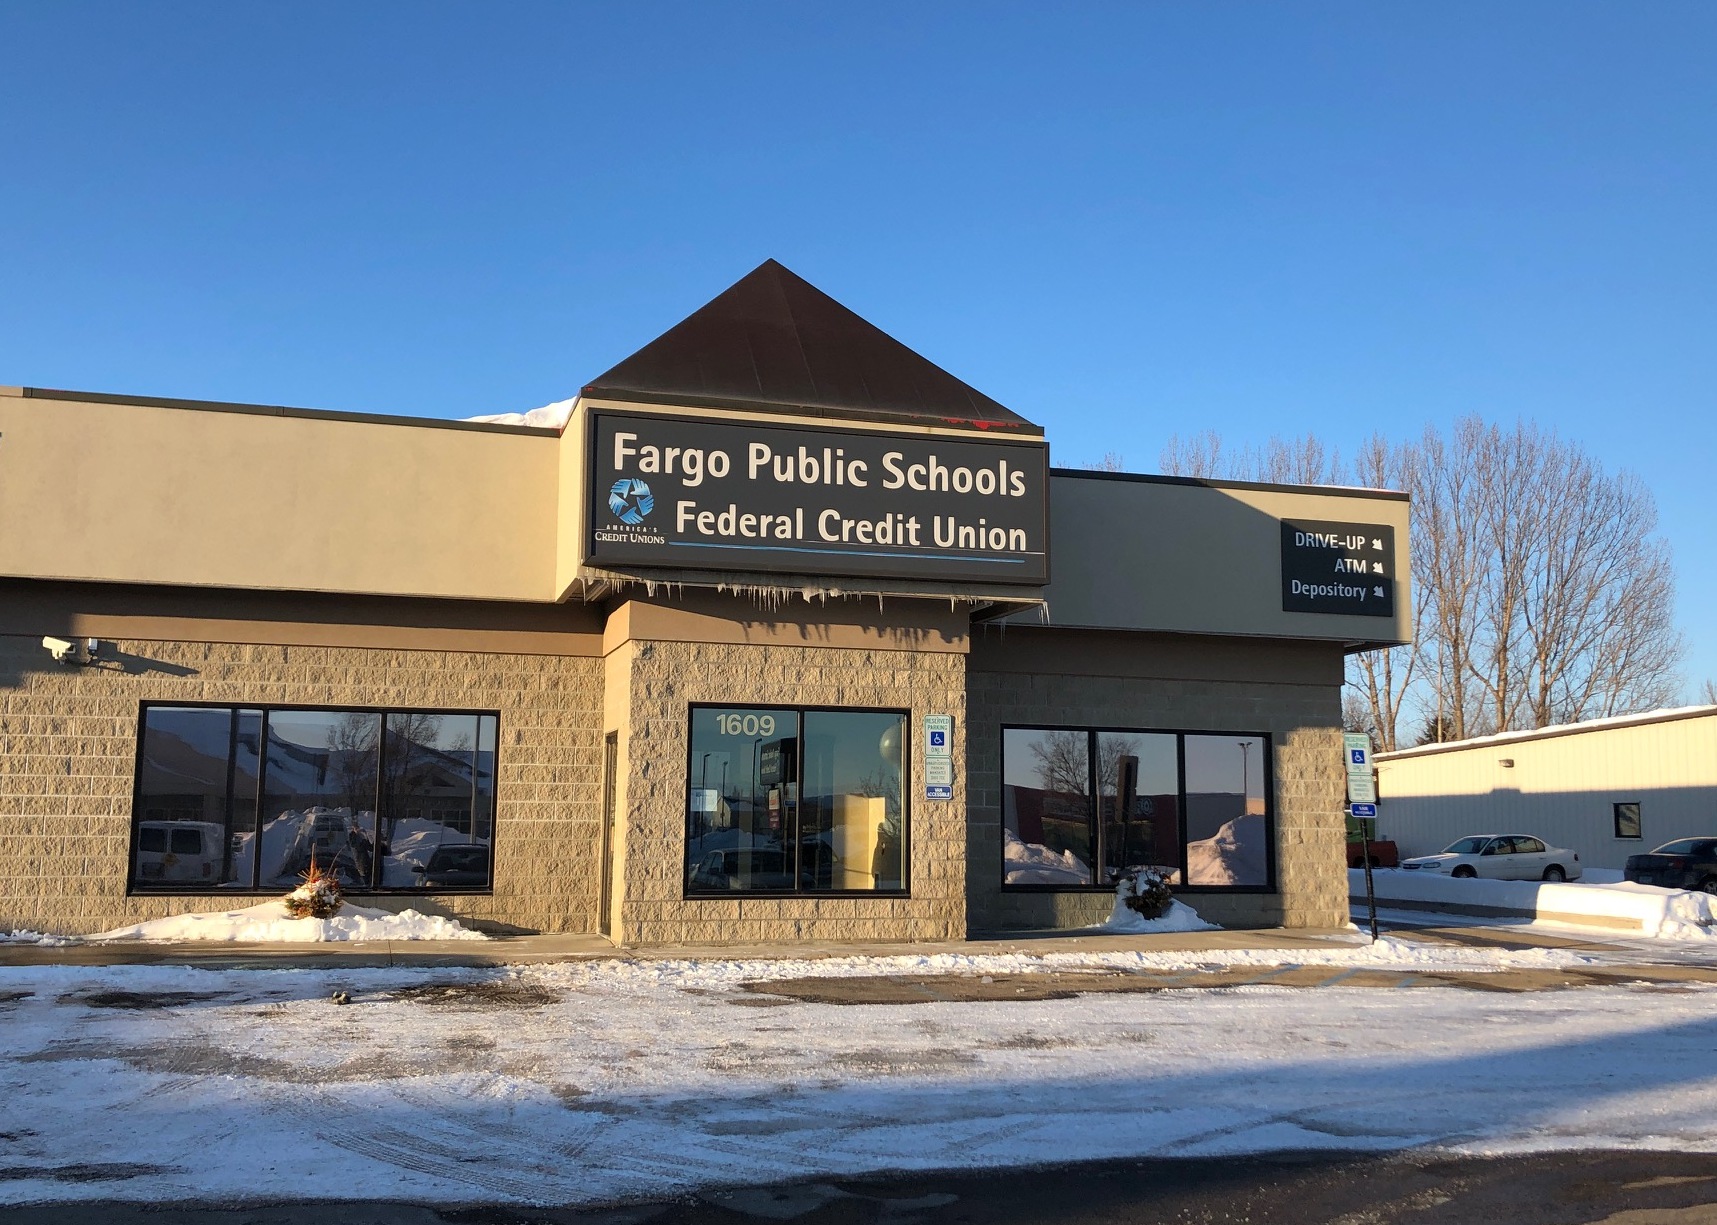 Fargo Public Schools Federal Credit Union